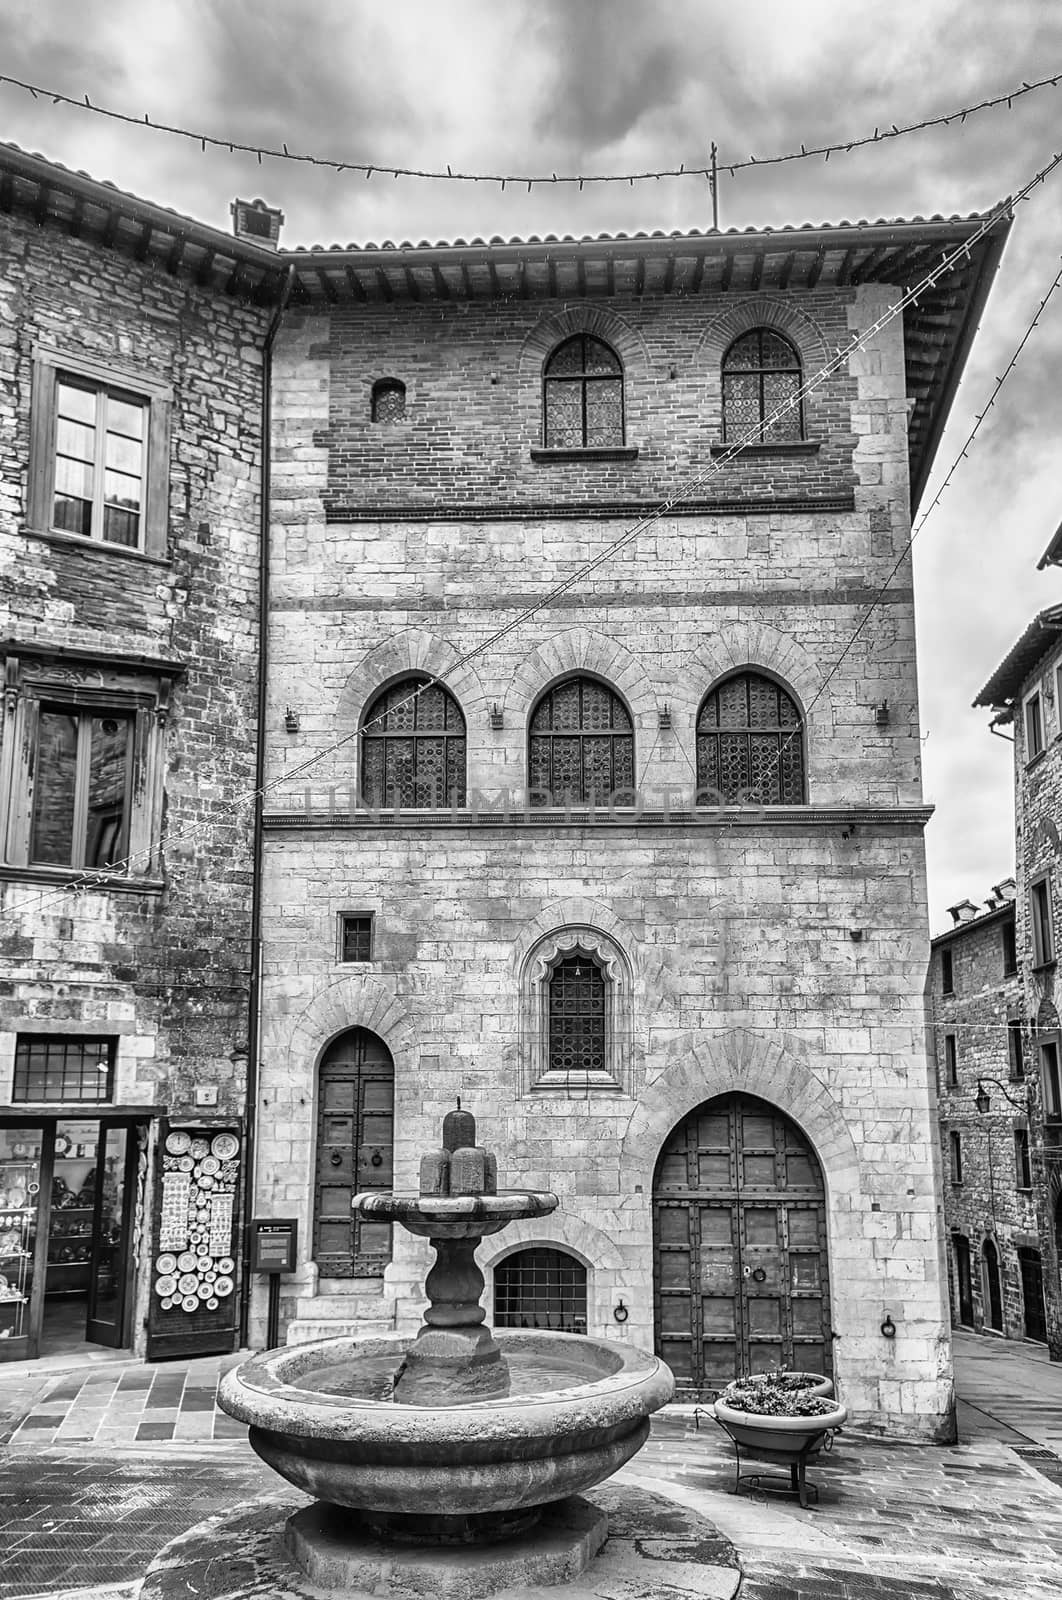 View of Palazzo del Bargello, medieval building in Gubbio, Italy by marcorubino